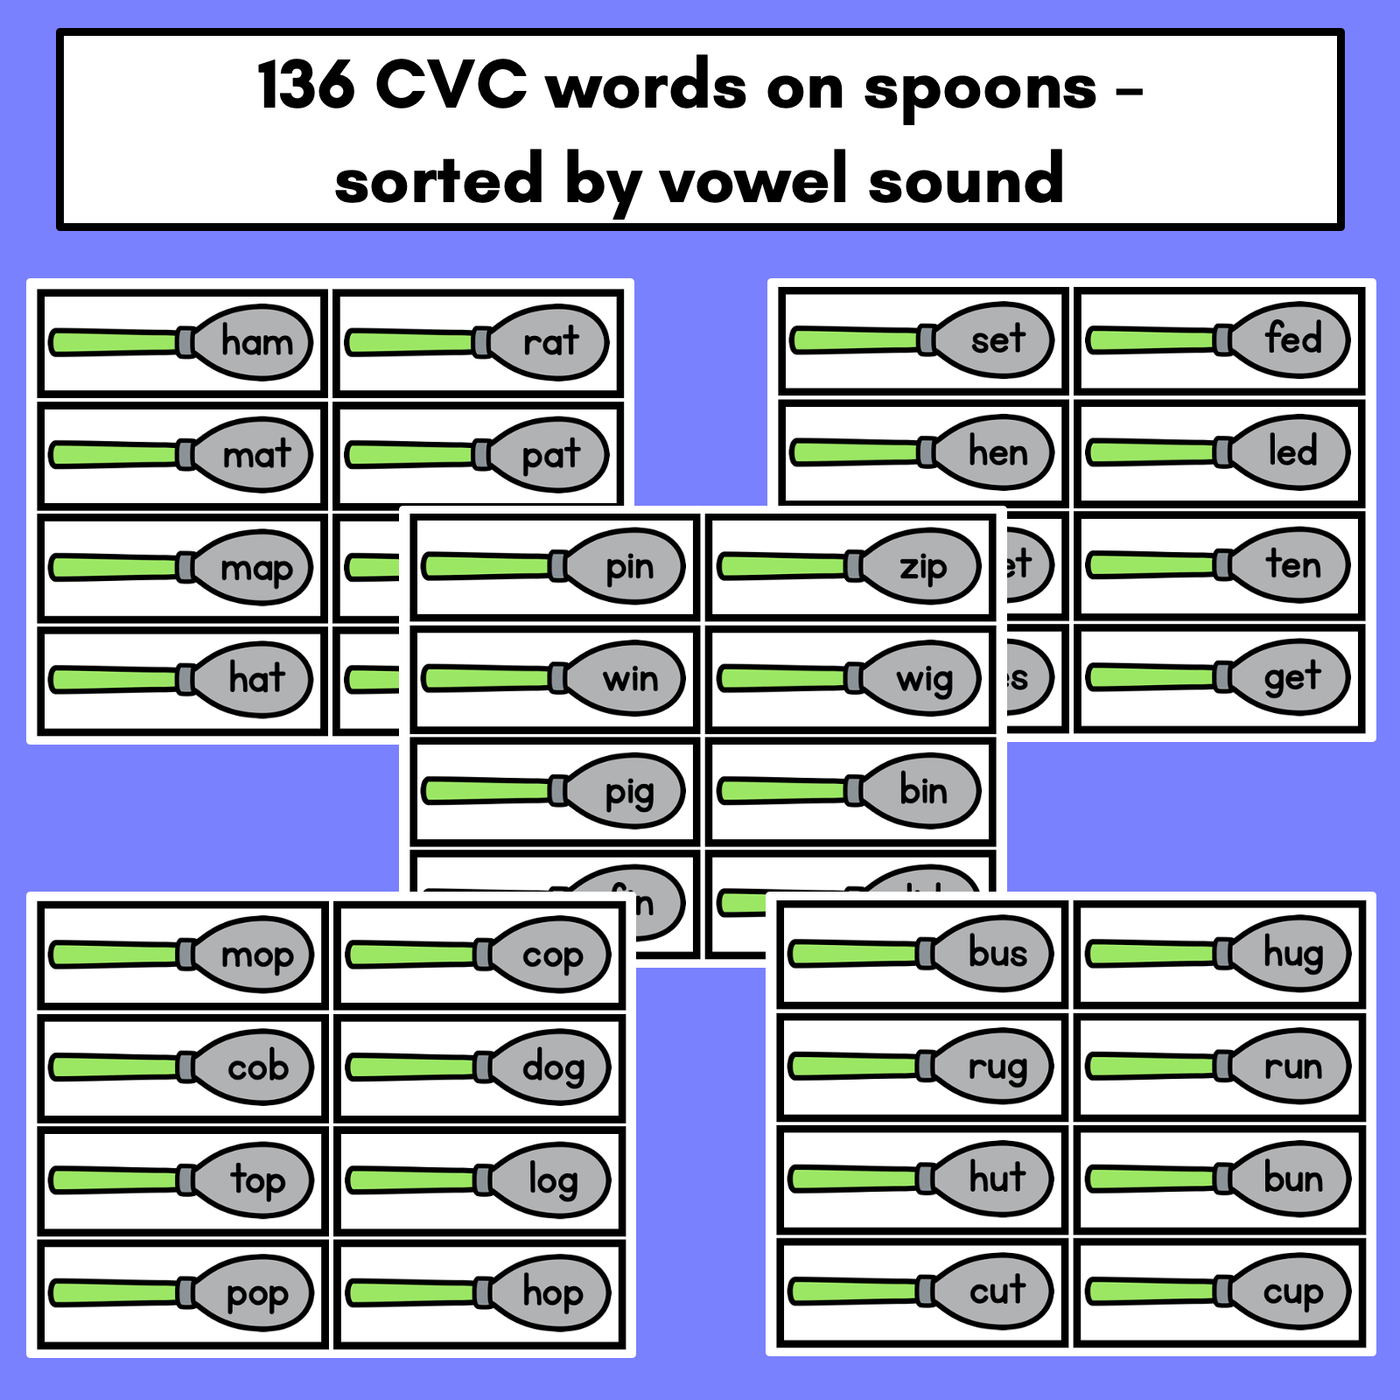 CVC Word Building Phonics Game - SOUPY SOUNDS